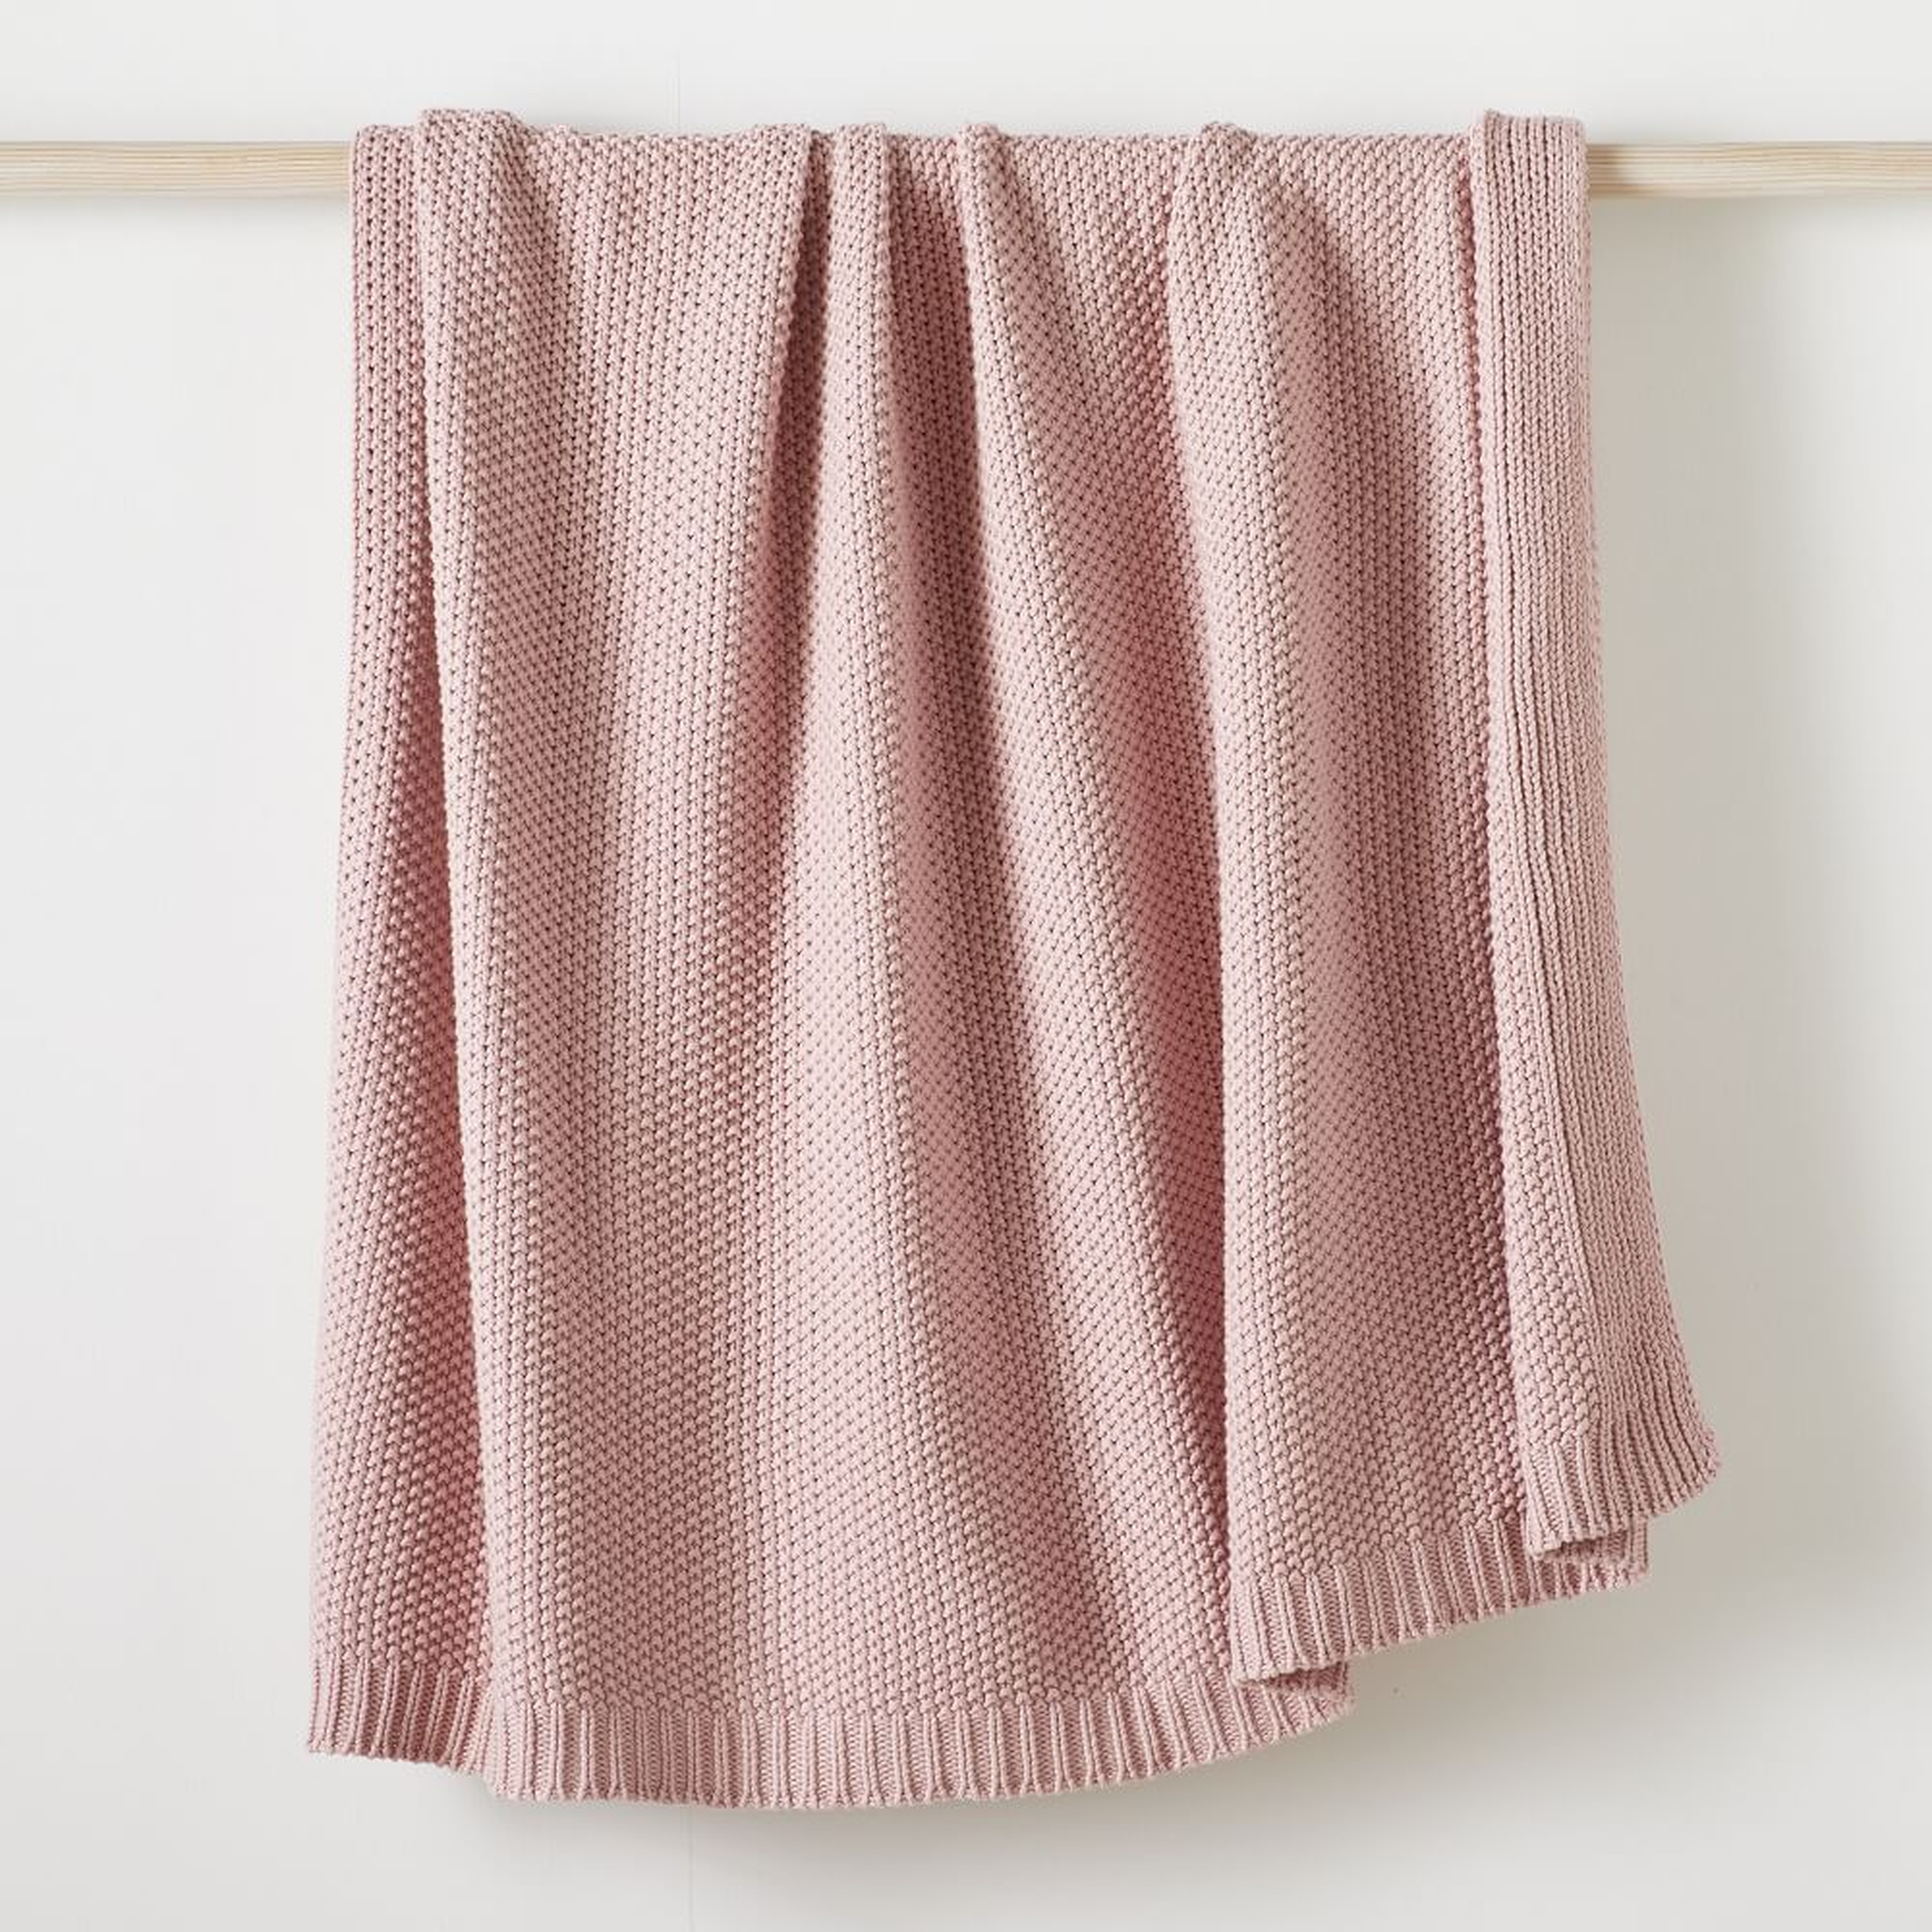 Cotton Knit Throw, Pink Stone, 50"x60" - West Elm